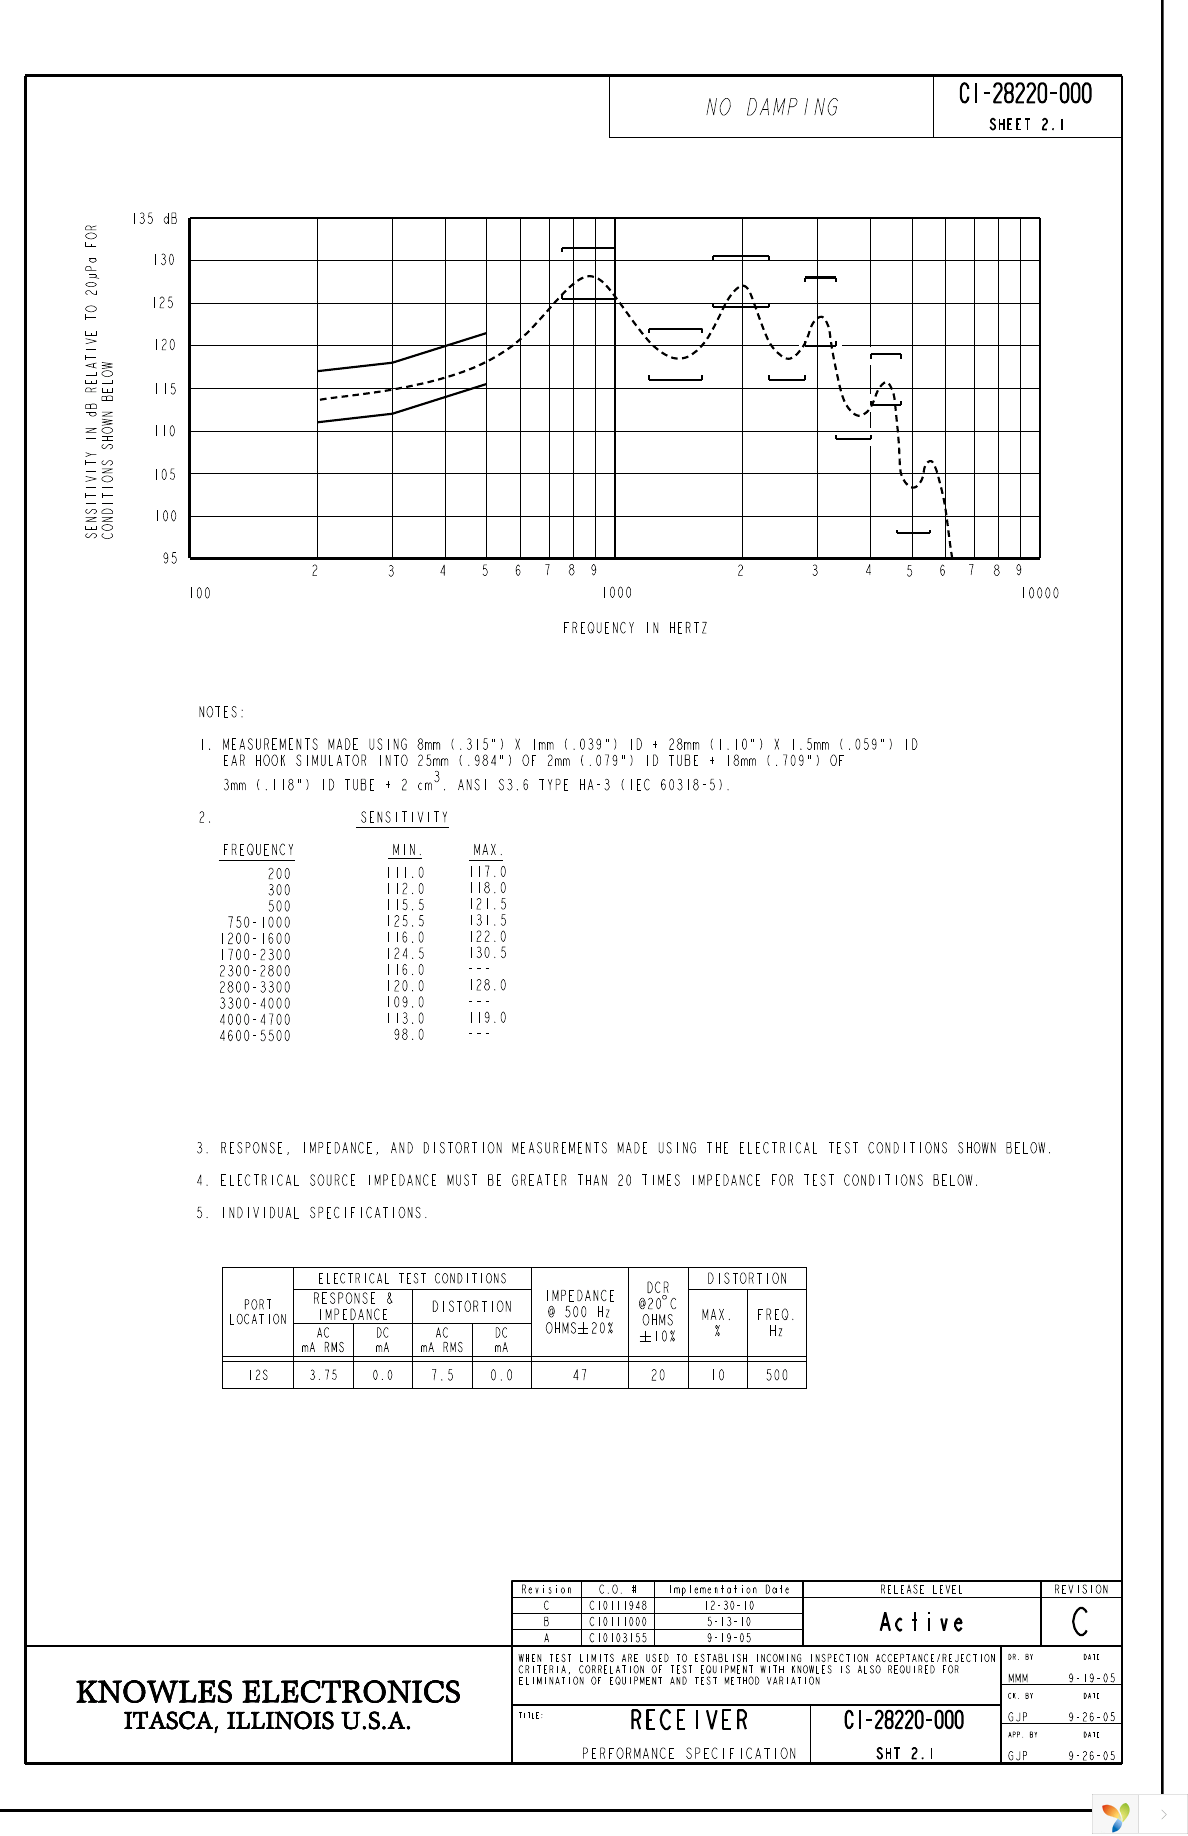 CI-28220-000 Page 2